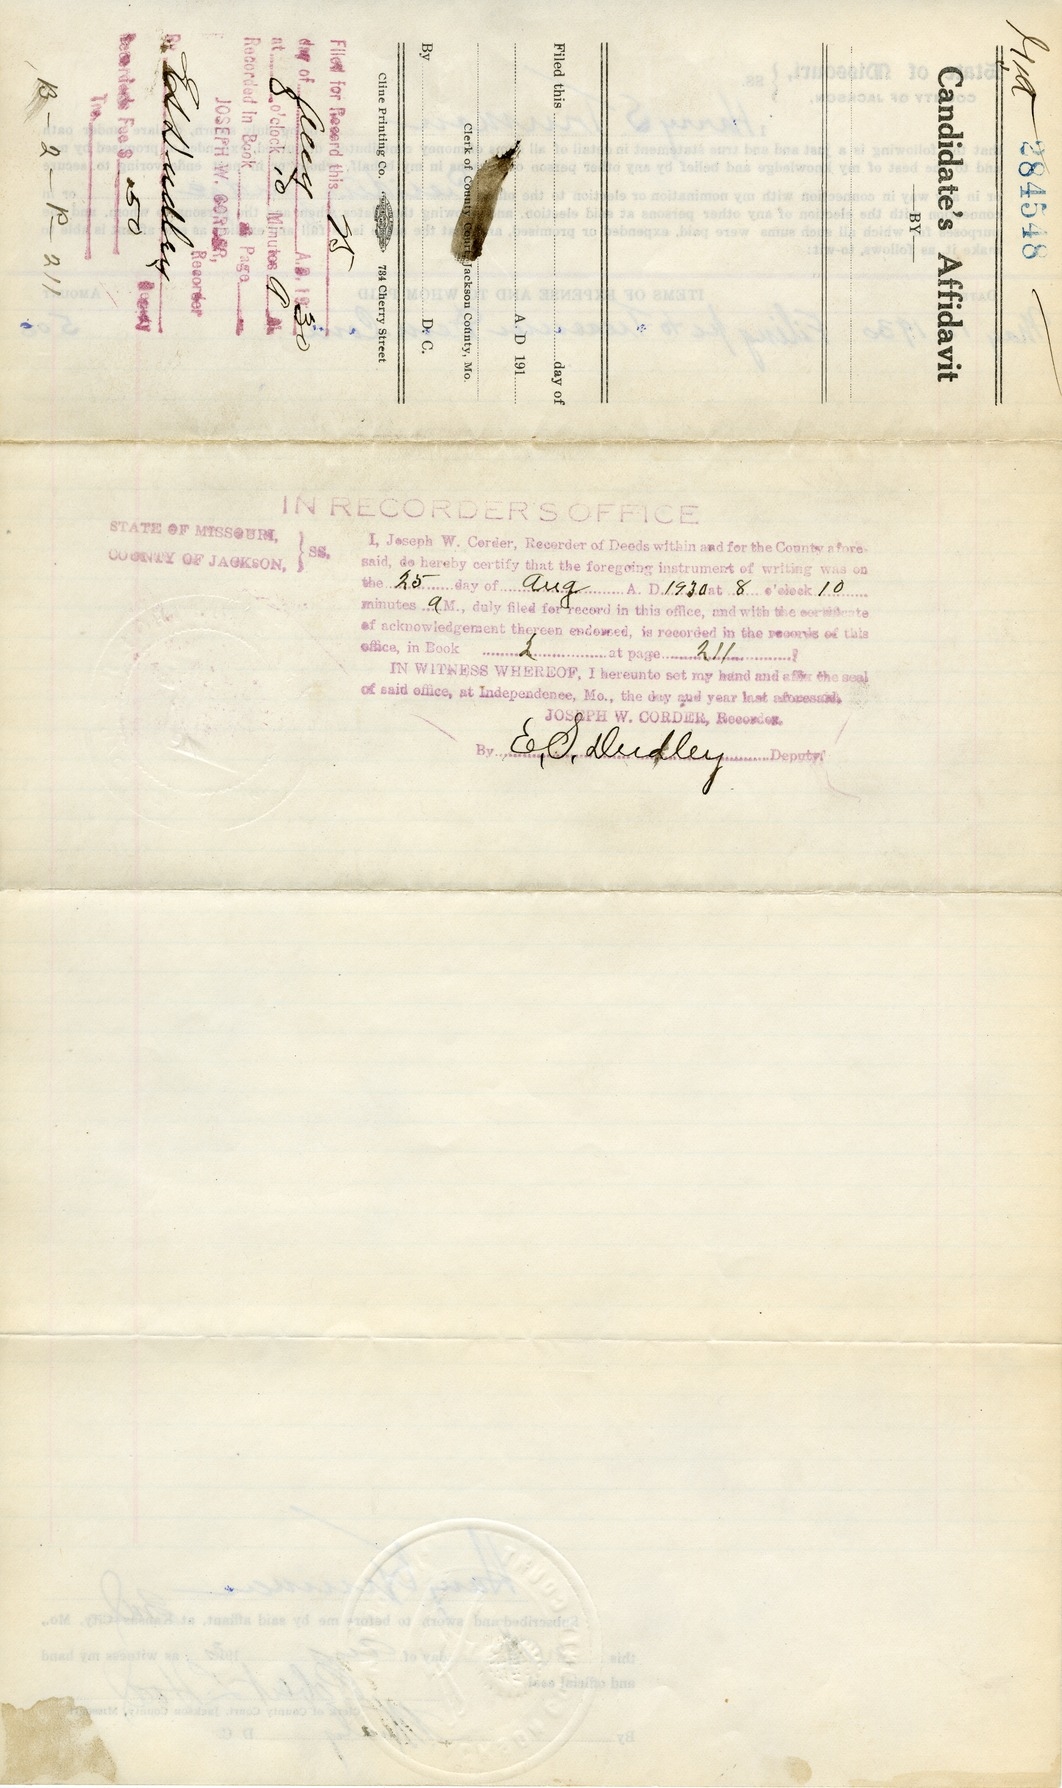 Candidate's Affidavit of Harry S. Truman